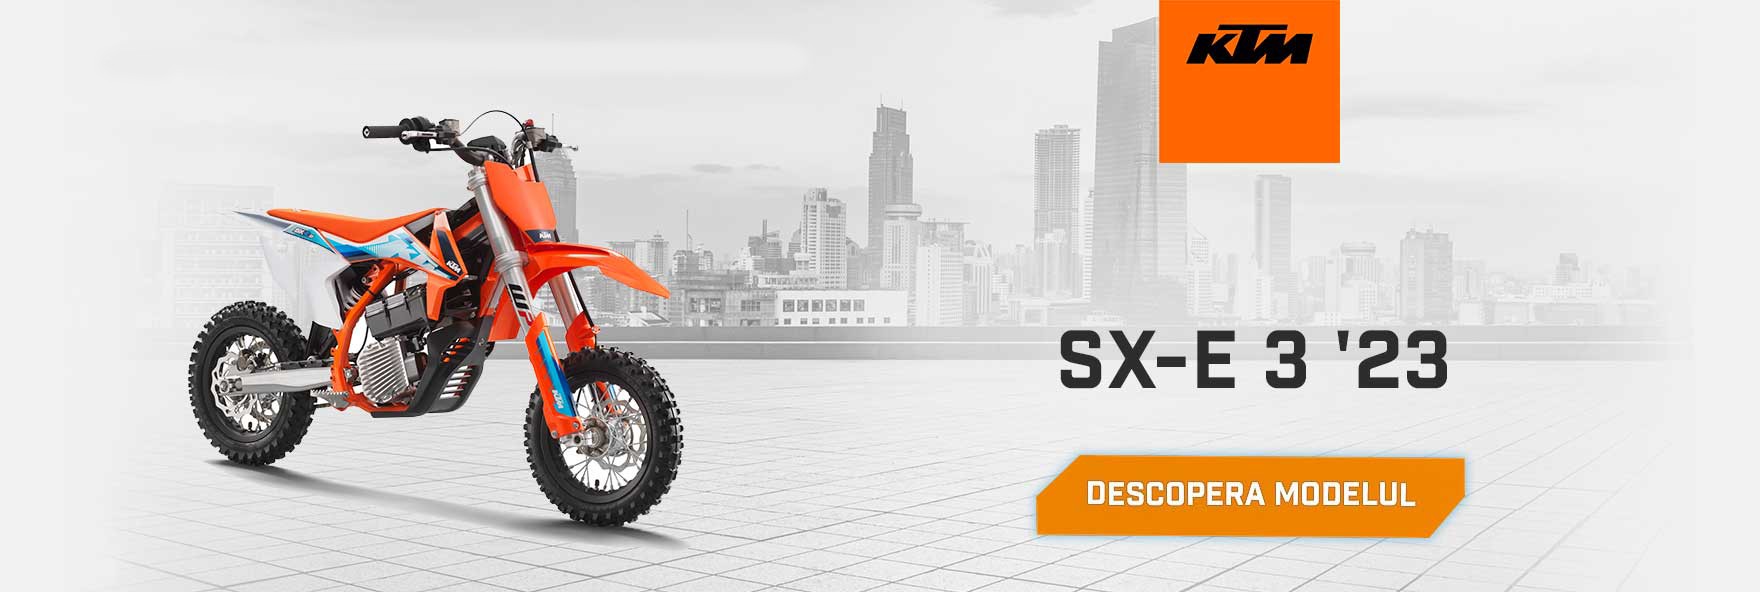 KTM SX-E 3 '23